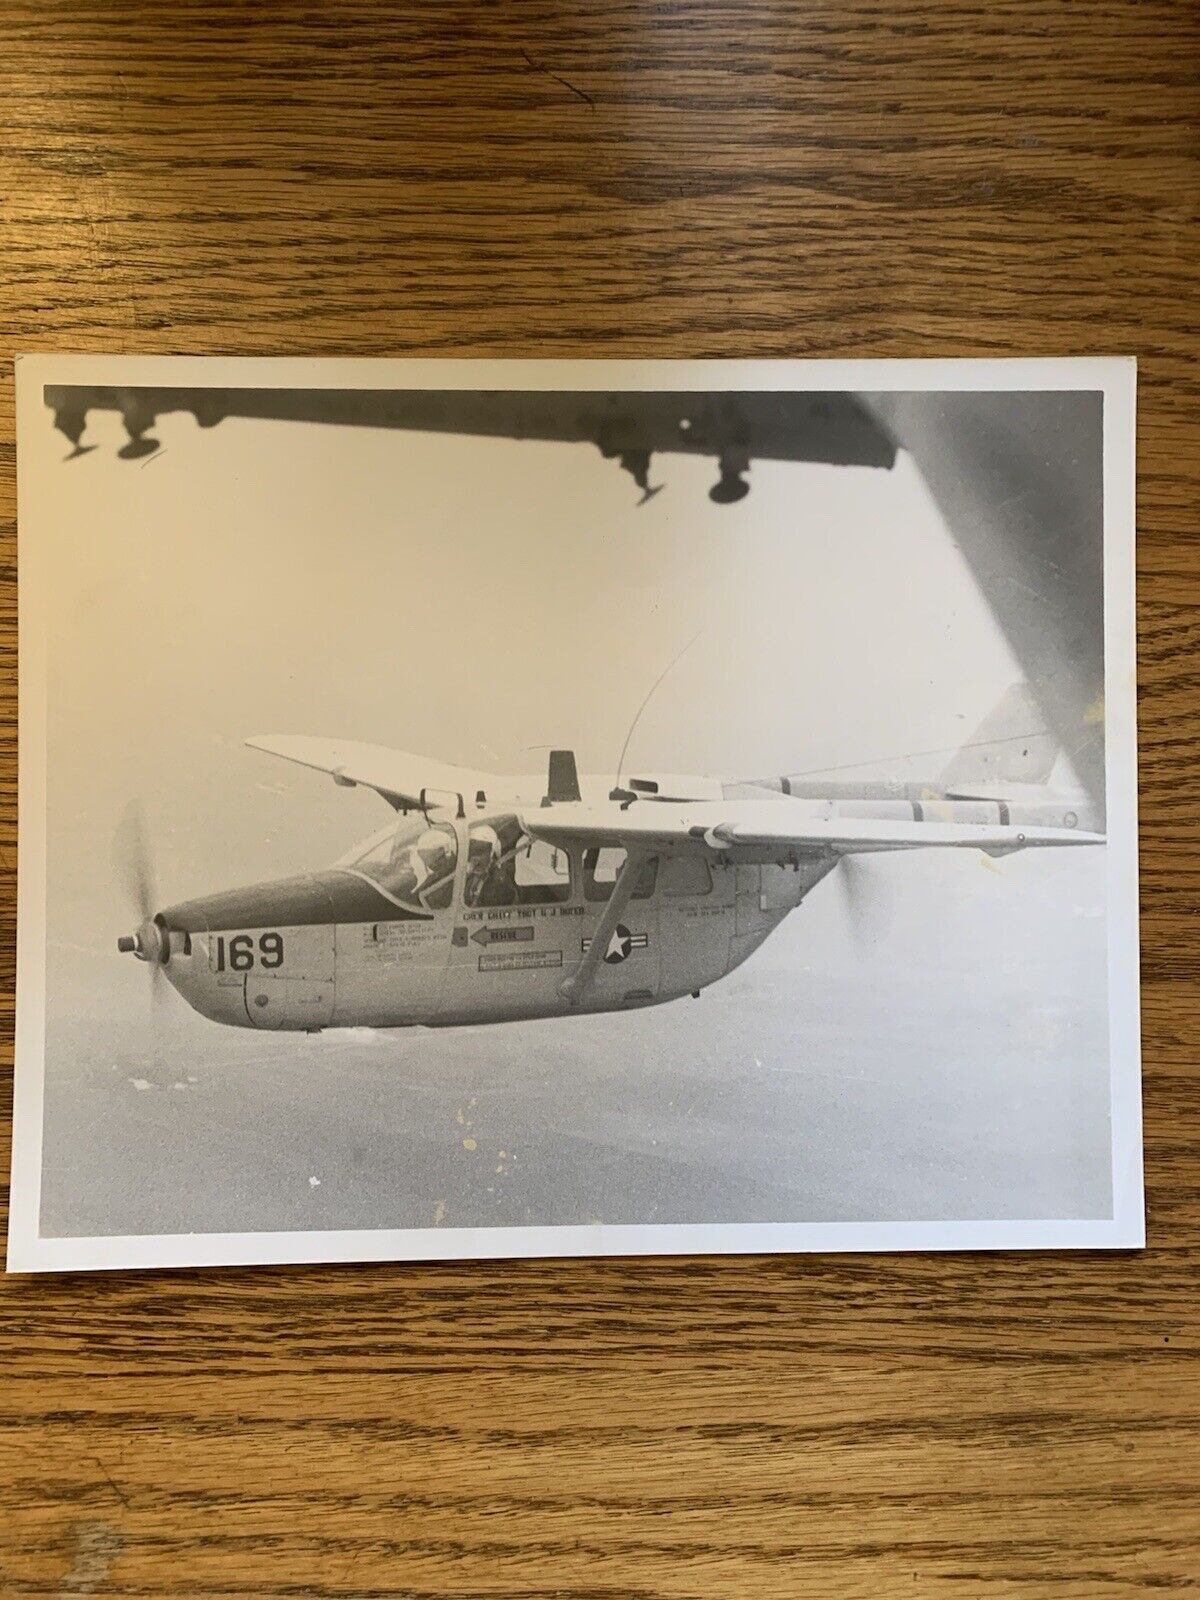 Illinois Air National Guard Photo Reconnaissance Aircraft Undated Photo